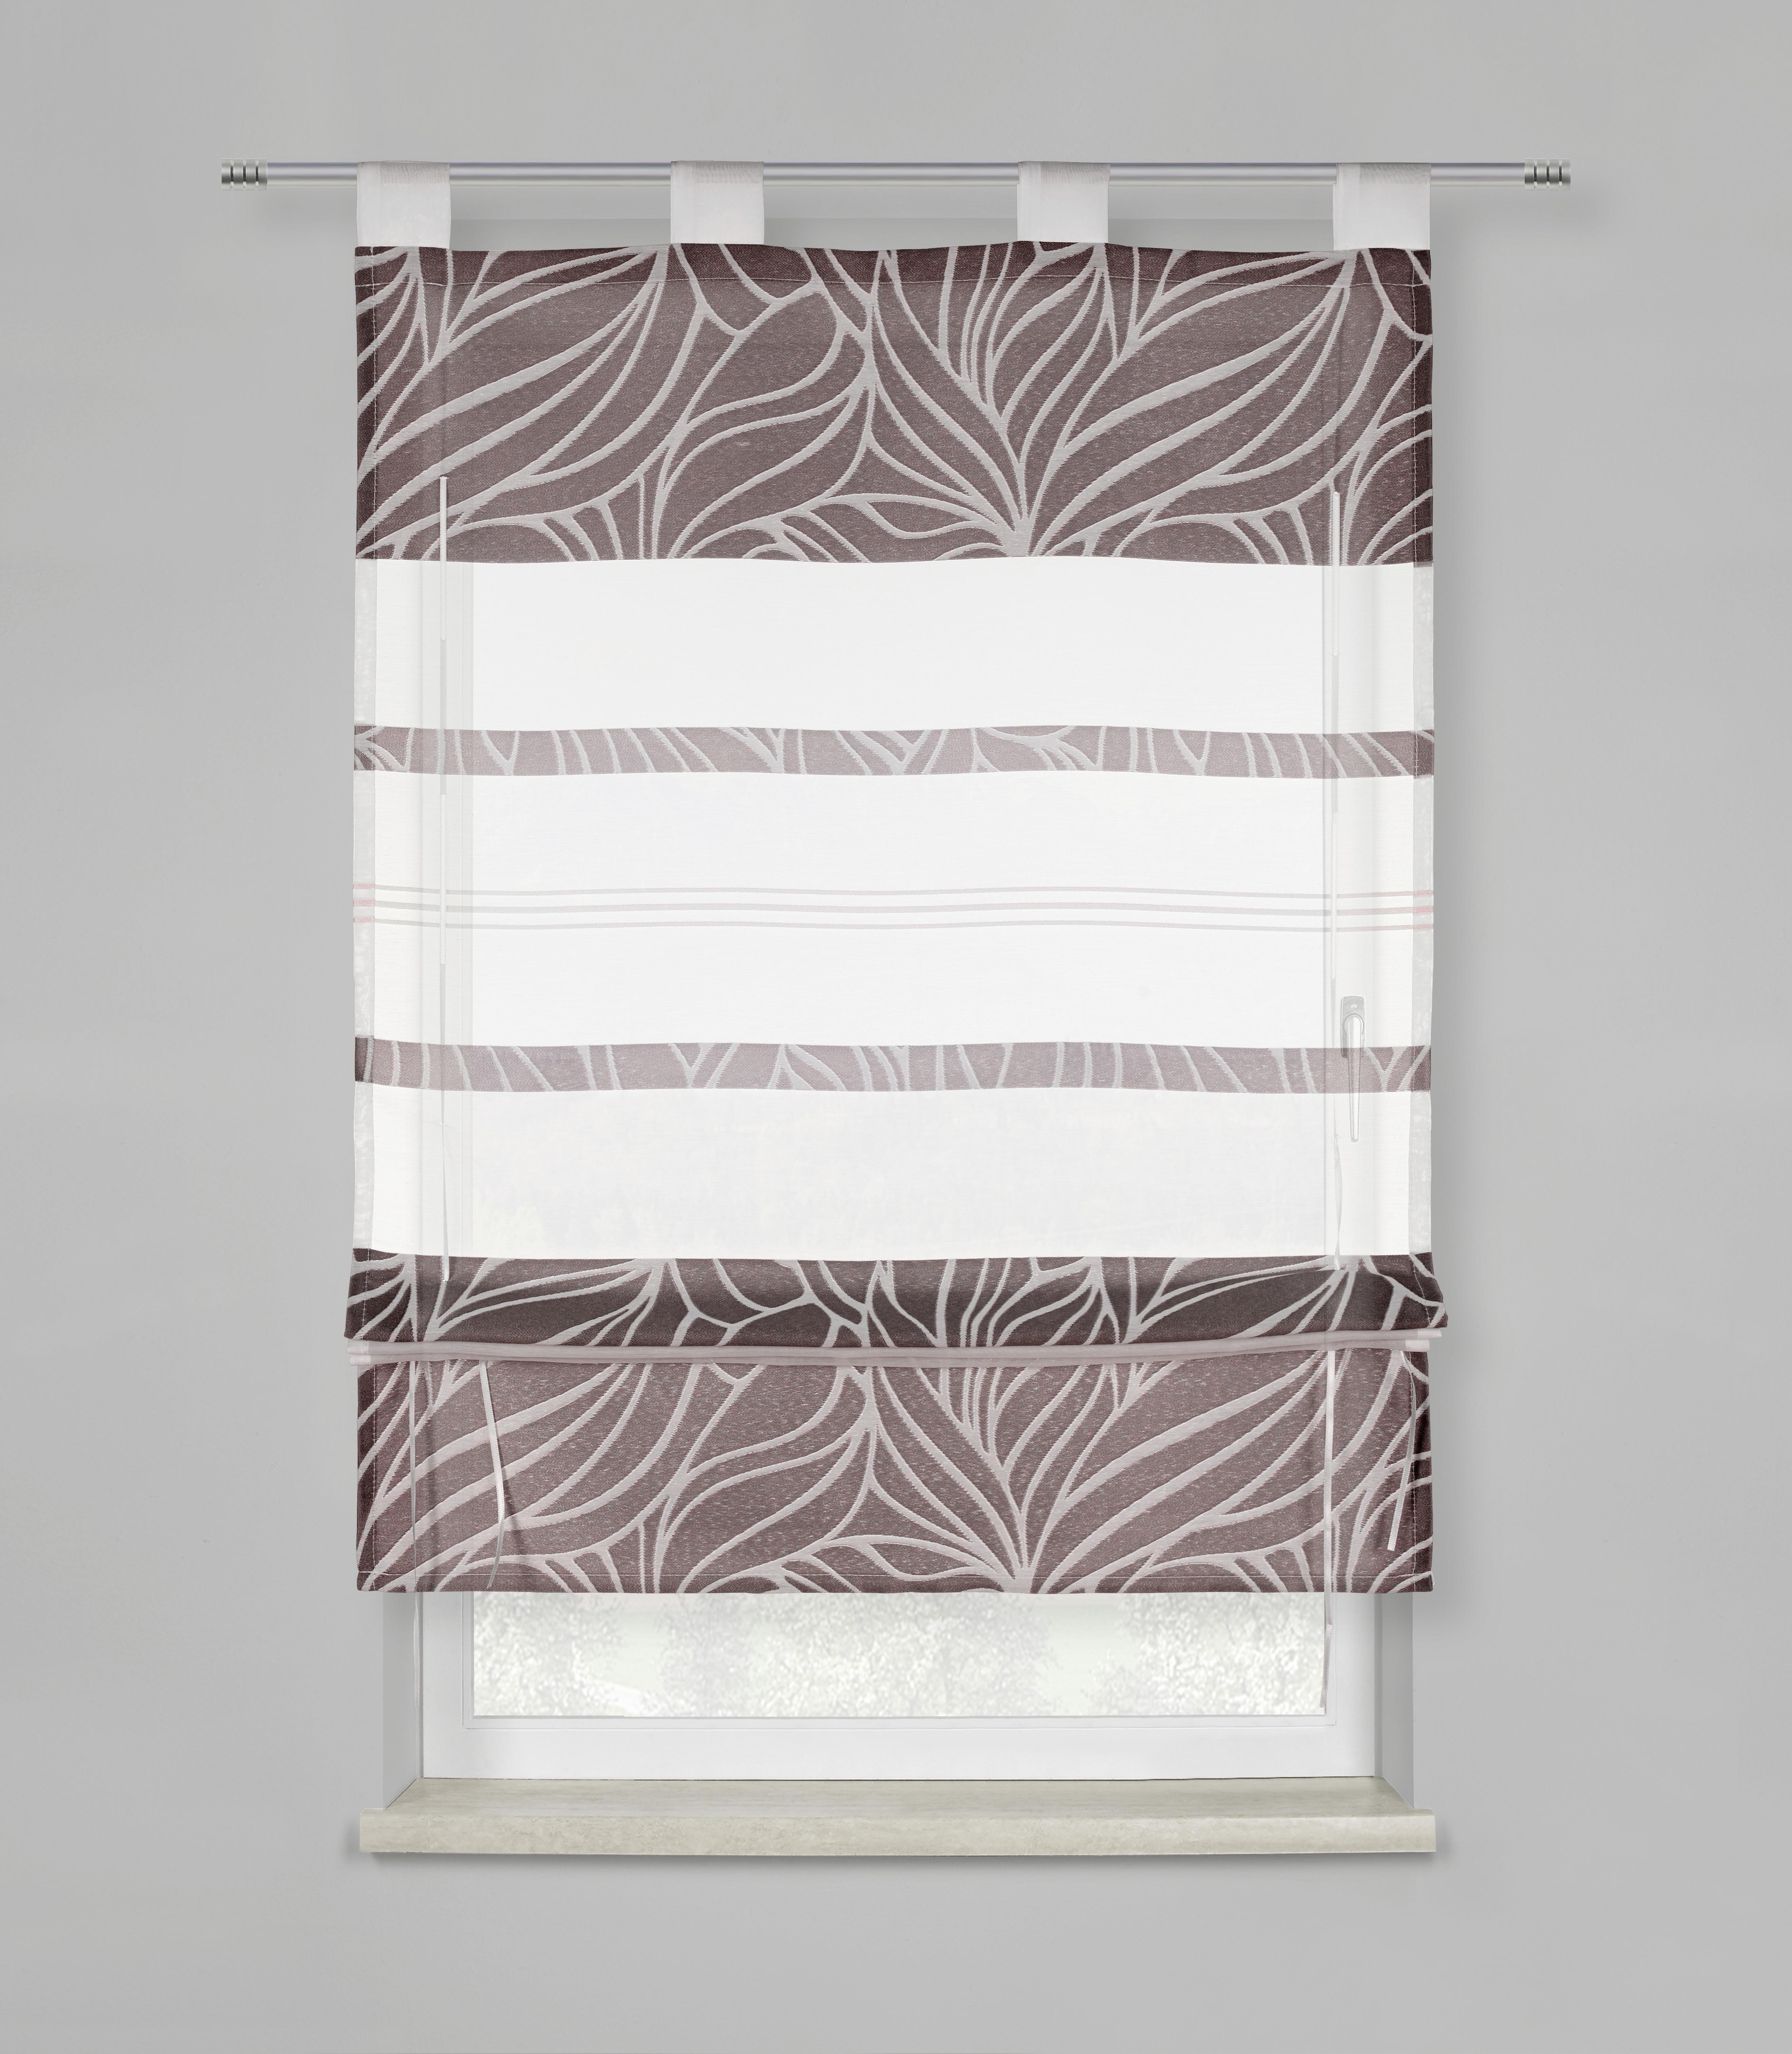 Bändchenrollo Anita in Grau ca. 60x140cm - Grau, KONVENTIONELL, Textil (60/140cm) - Modern Living